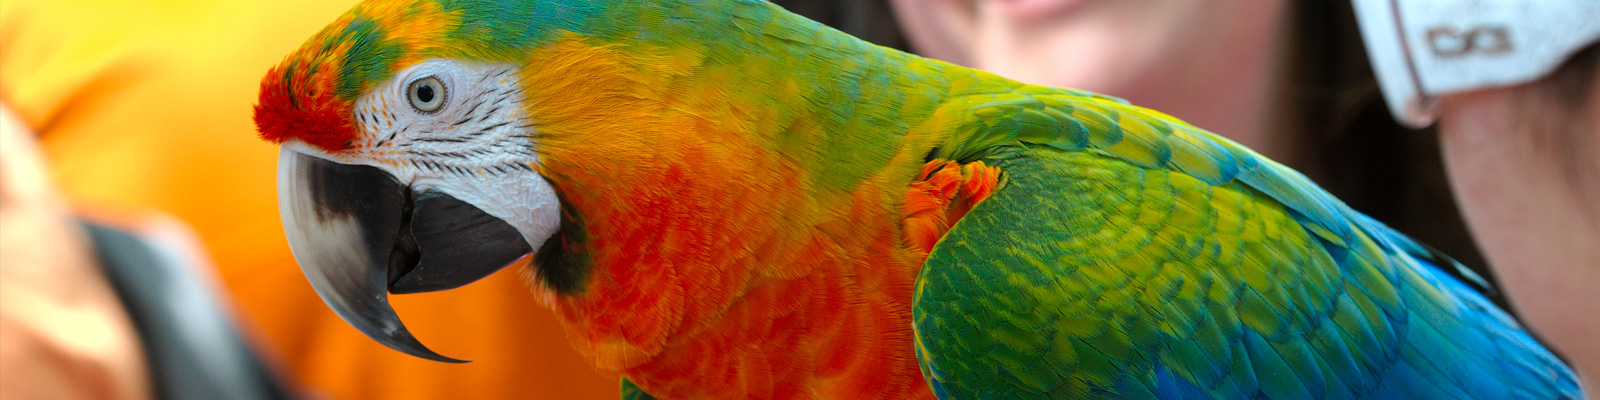 Macaw used as tourist photo prop (photo: Derrick Coetzee)